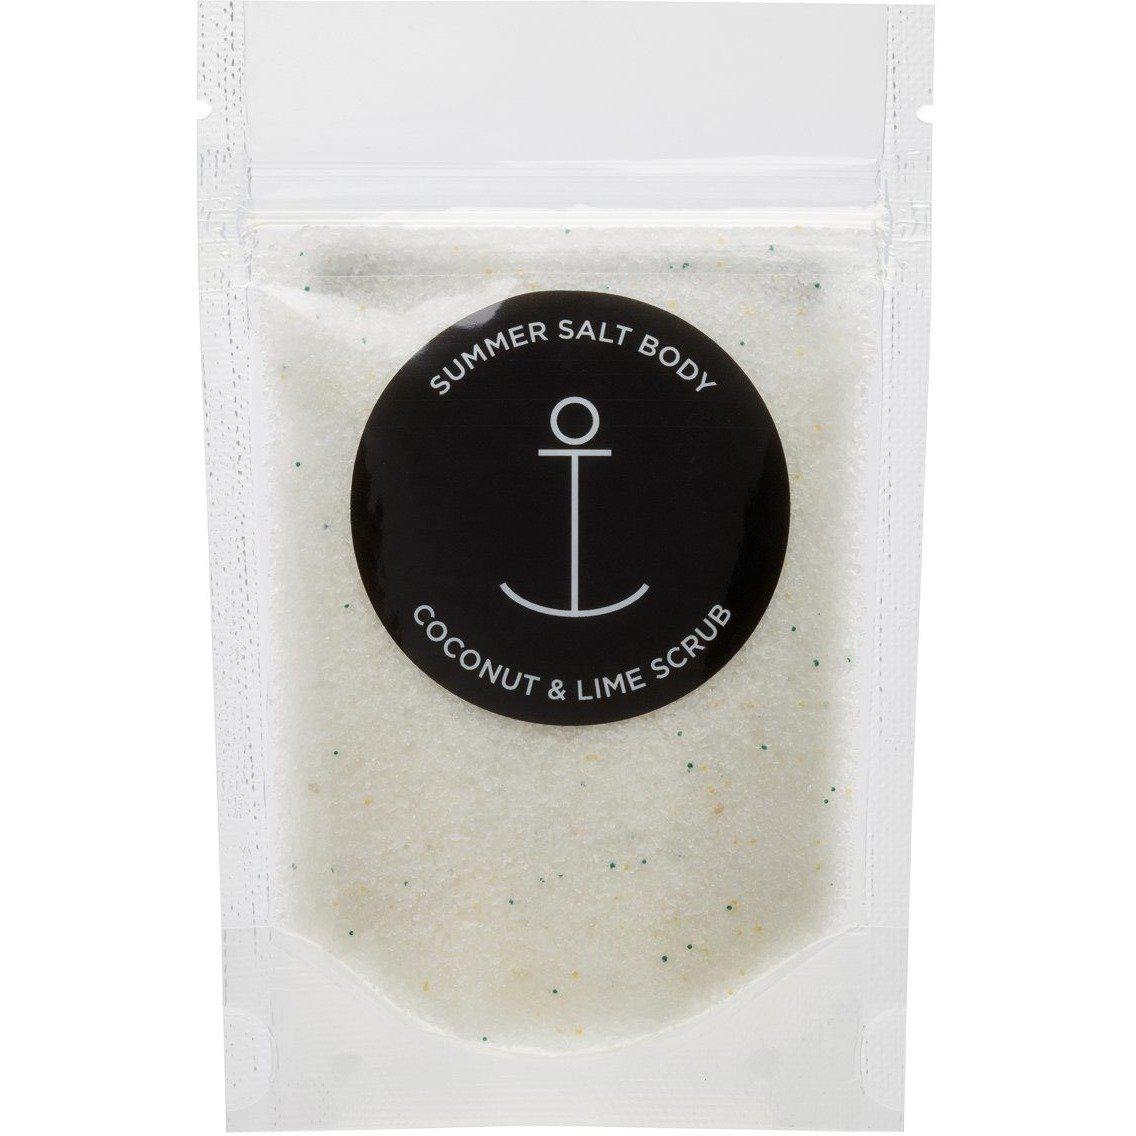 Mini Salt Scrub - 40g-Beauty & Well-Being-Summer Salt Body-Coconut & Lime-The Bay Room